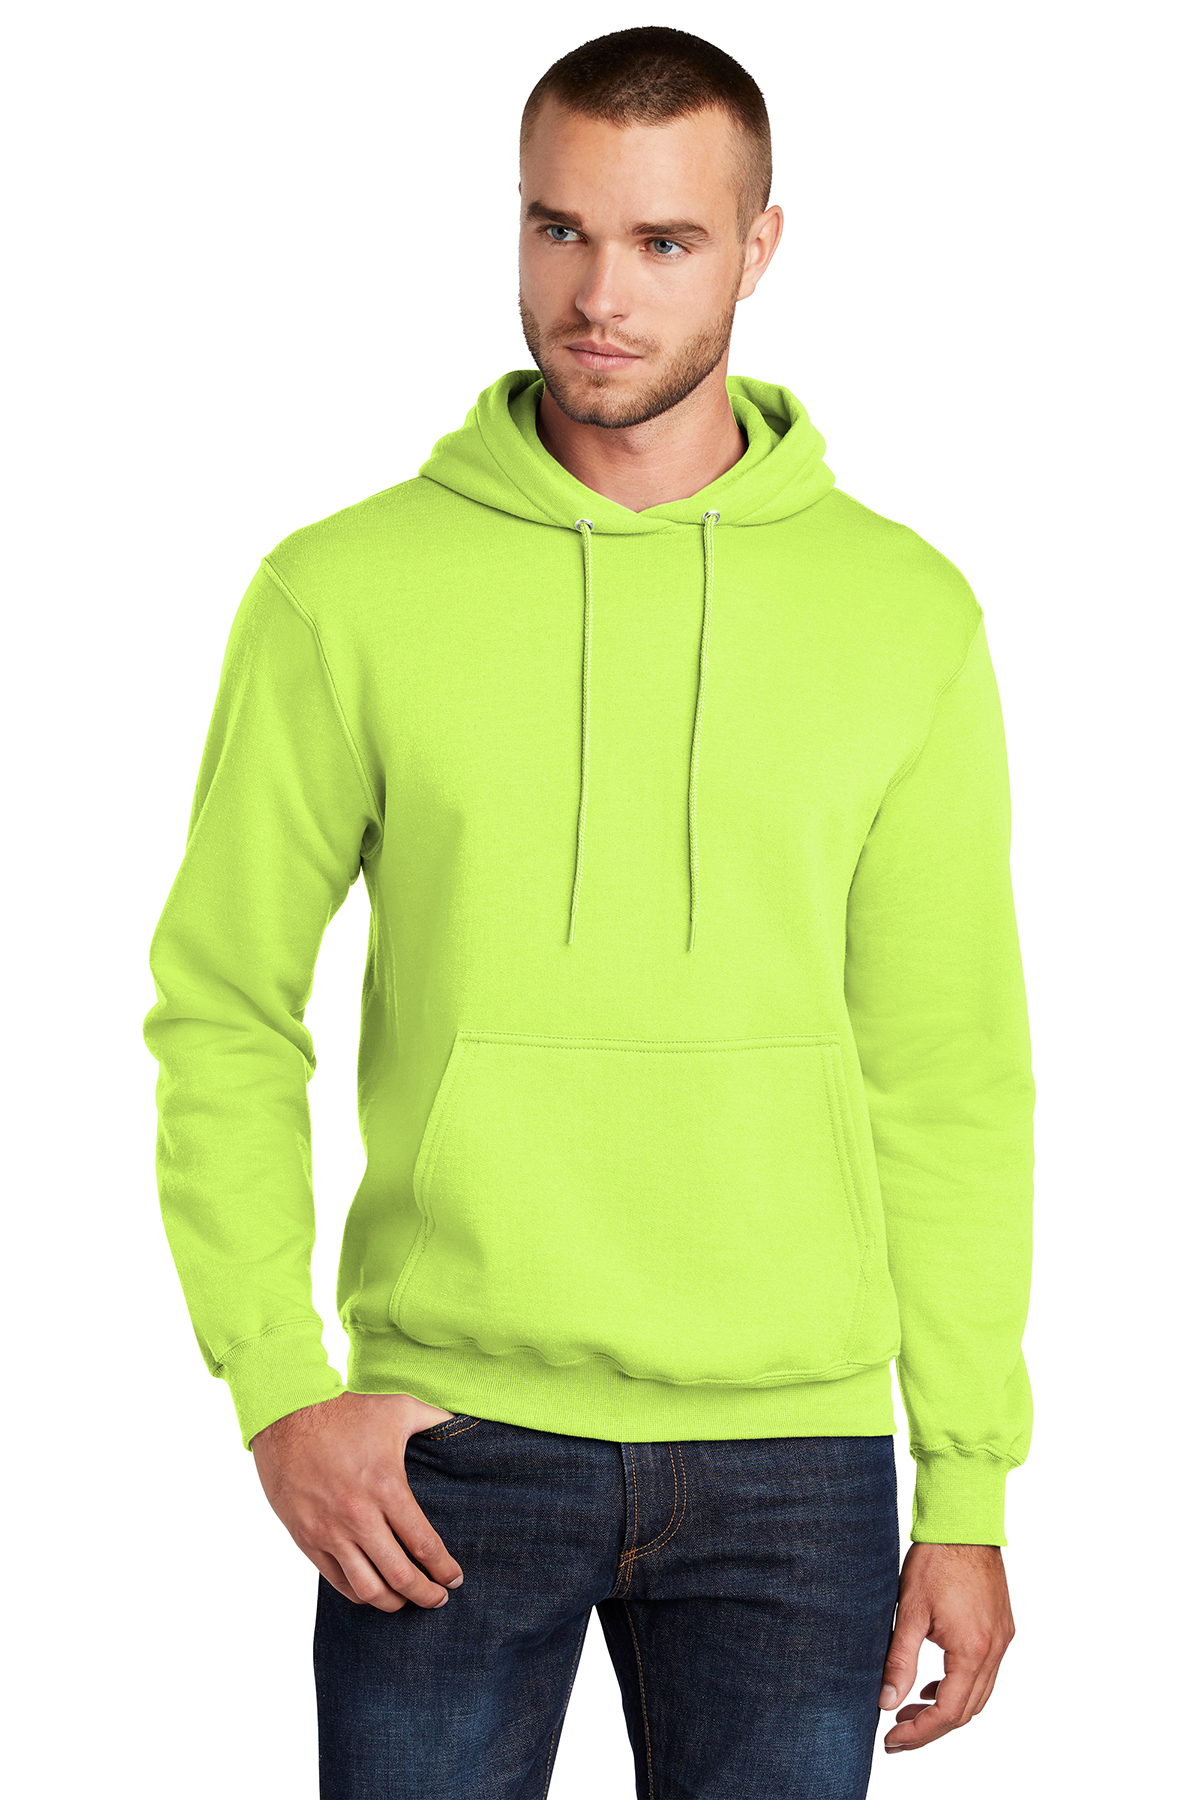 Core Company | & | Fleece Hooded & Company Port Pullover Sweatshirt Port Product